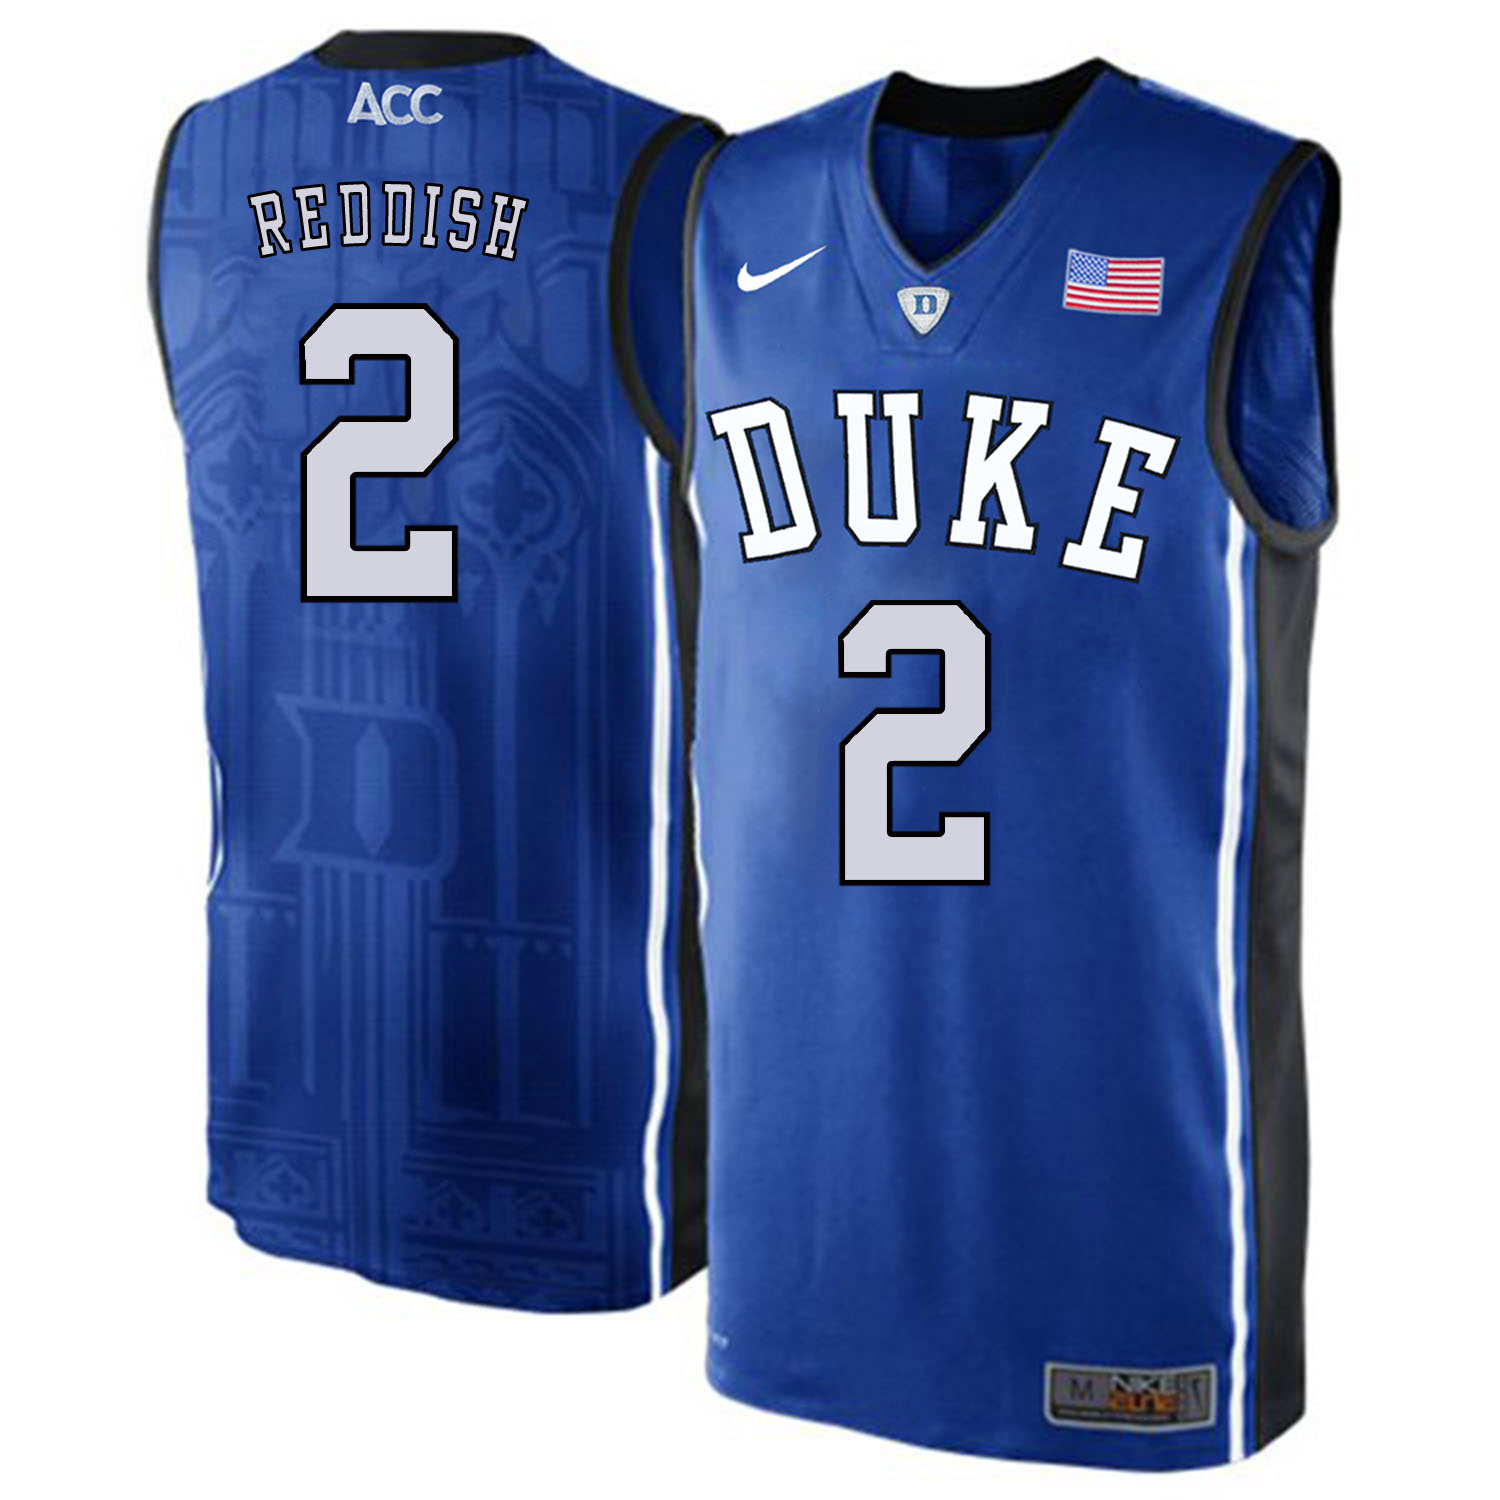 Duke Blue Devils 2 Cam Reddish Blue Elite Nike College Basketball Jersey